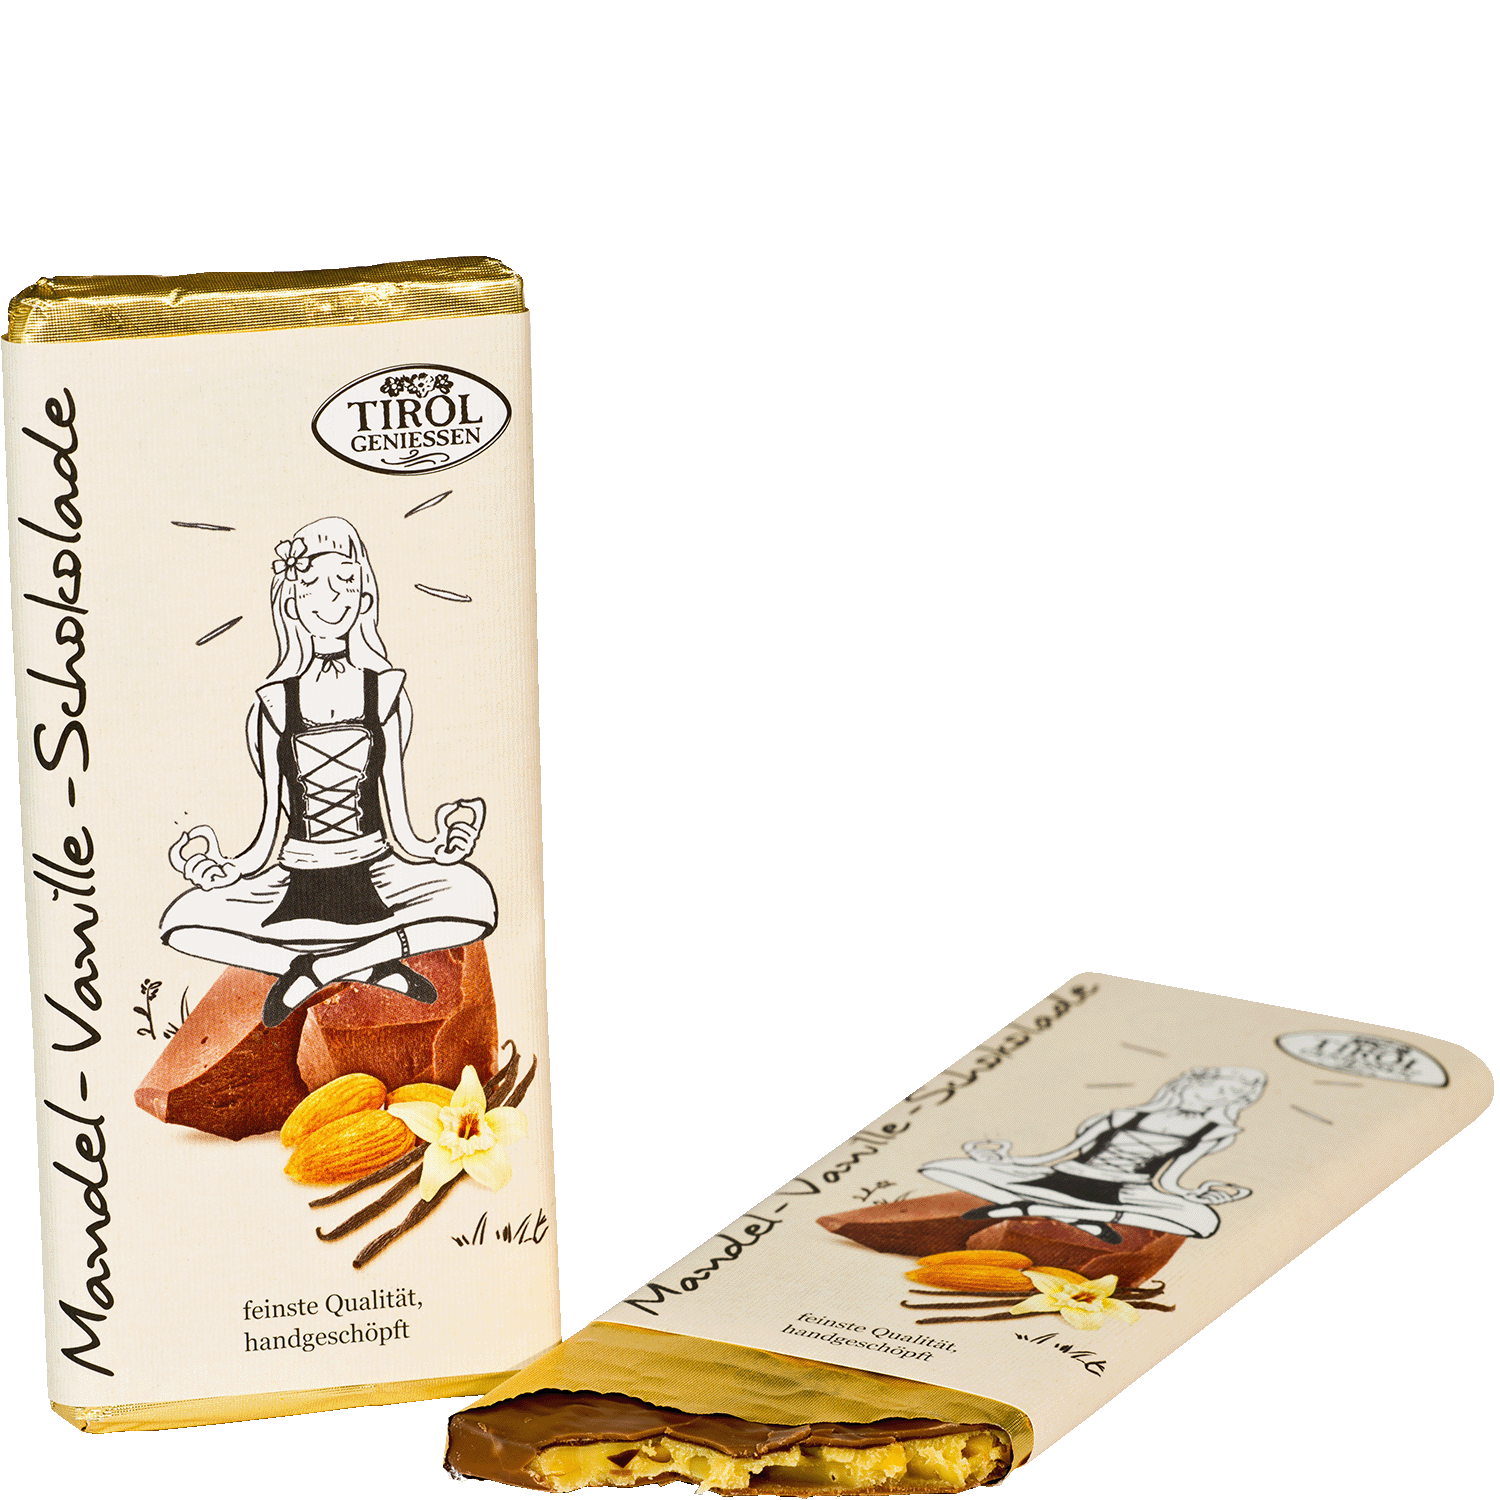 Almond Vanilla Chocolate from Austria from Tirol Geniessen